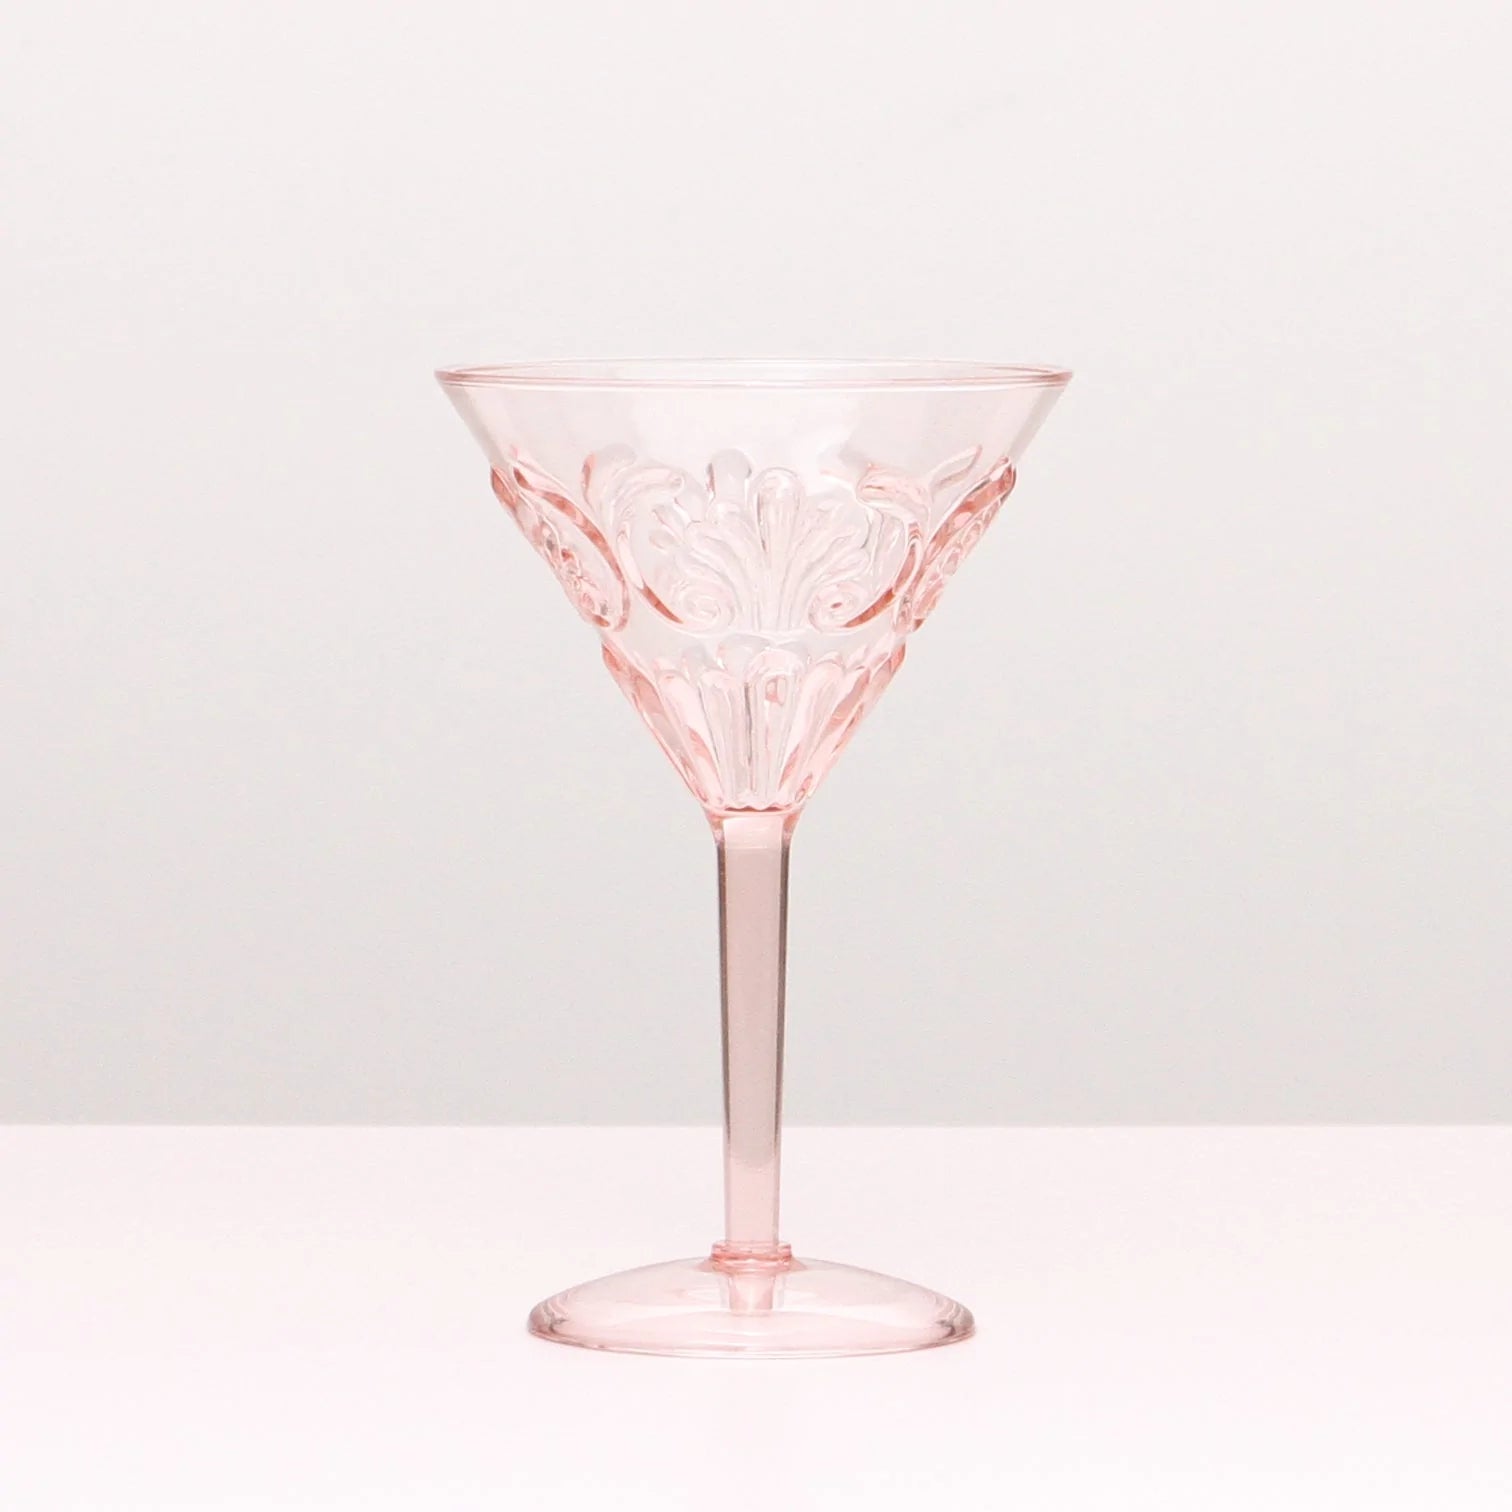 Flemington Acrylic Martini Glass - Pale Pink